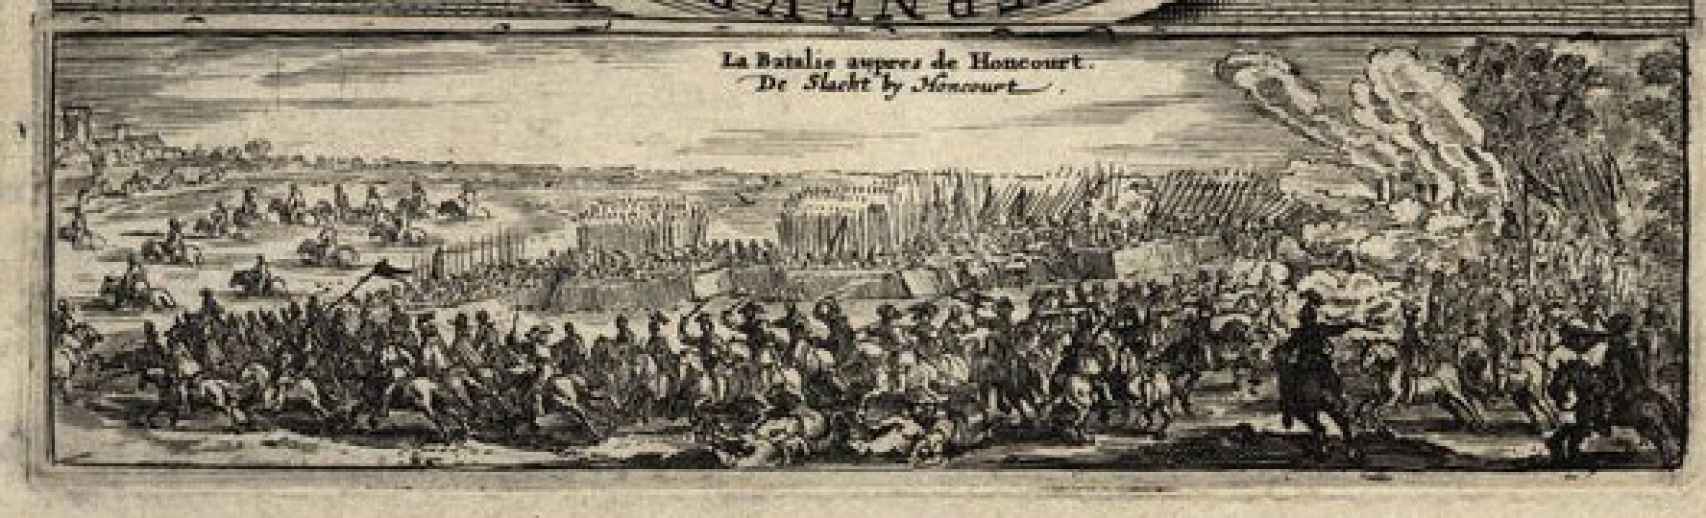 Representación del combate de Honnecourt. Siglo XVII